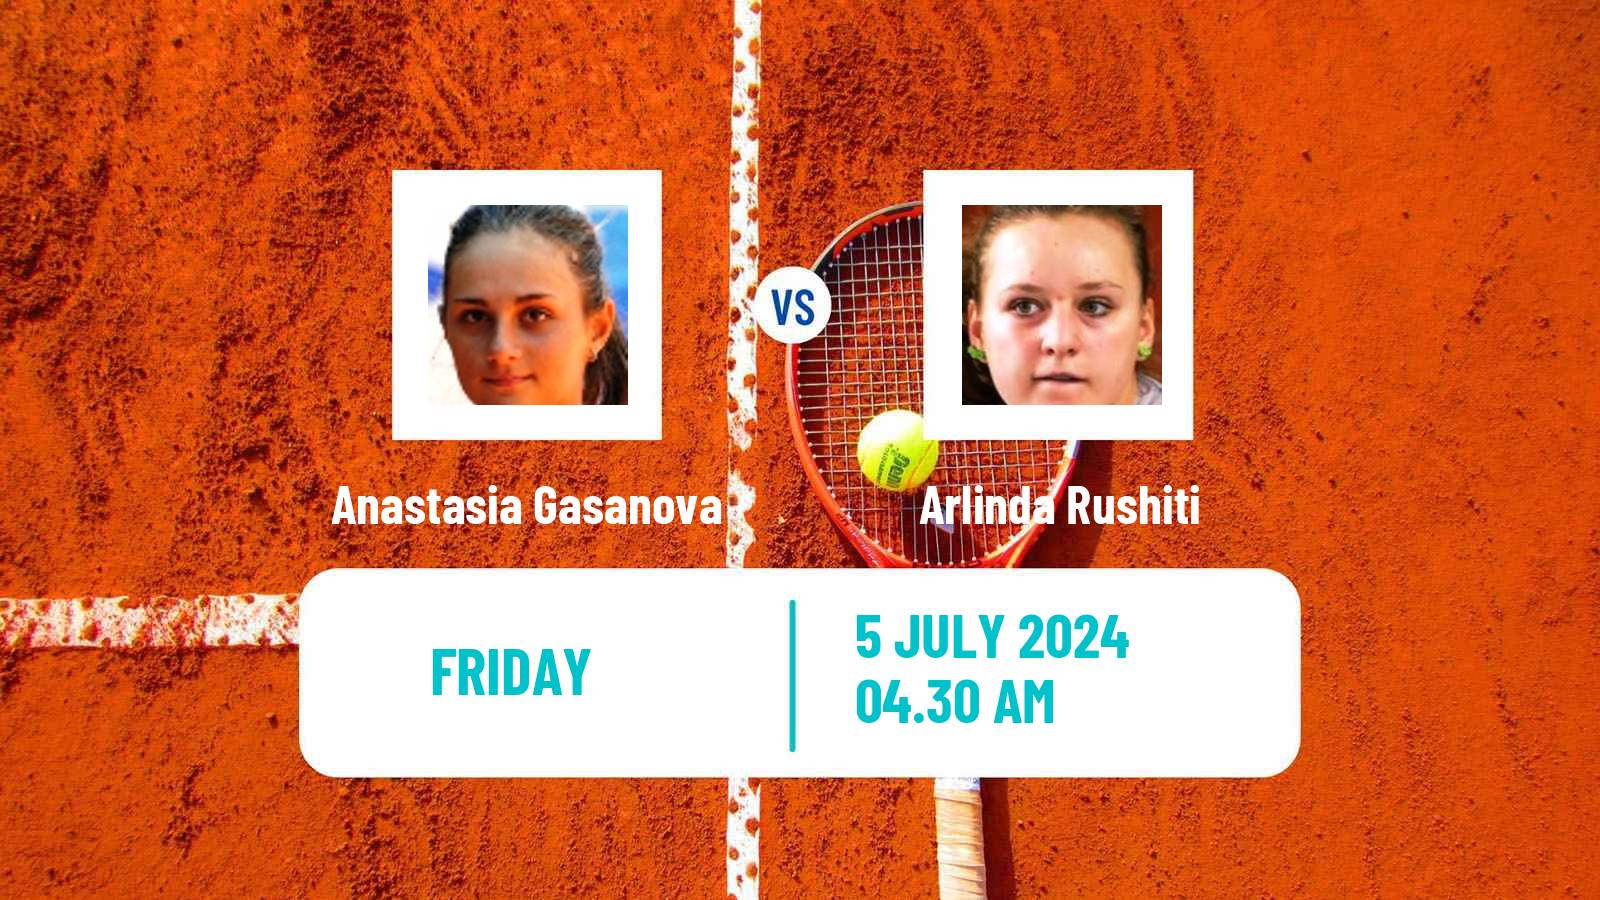 Tennis ITF W15 Monastir 25 Women Anastasia Gasanova - Arlinda Rushiti